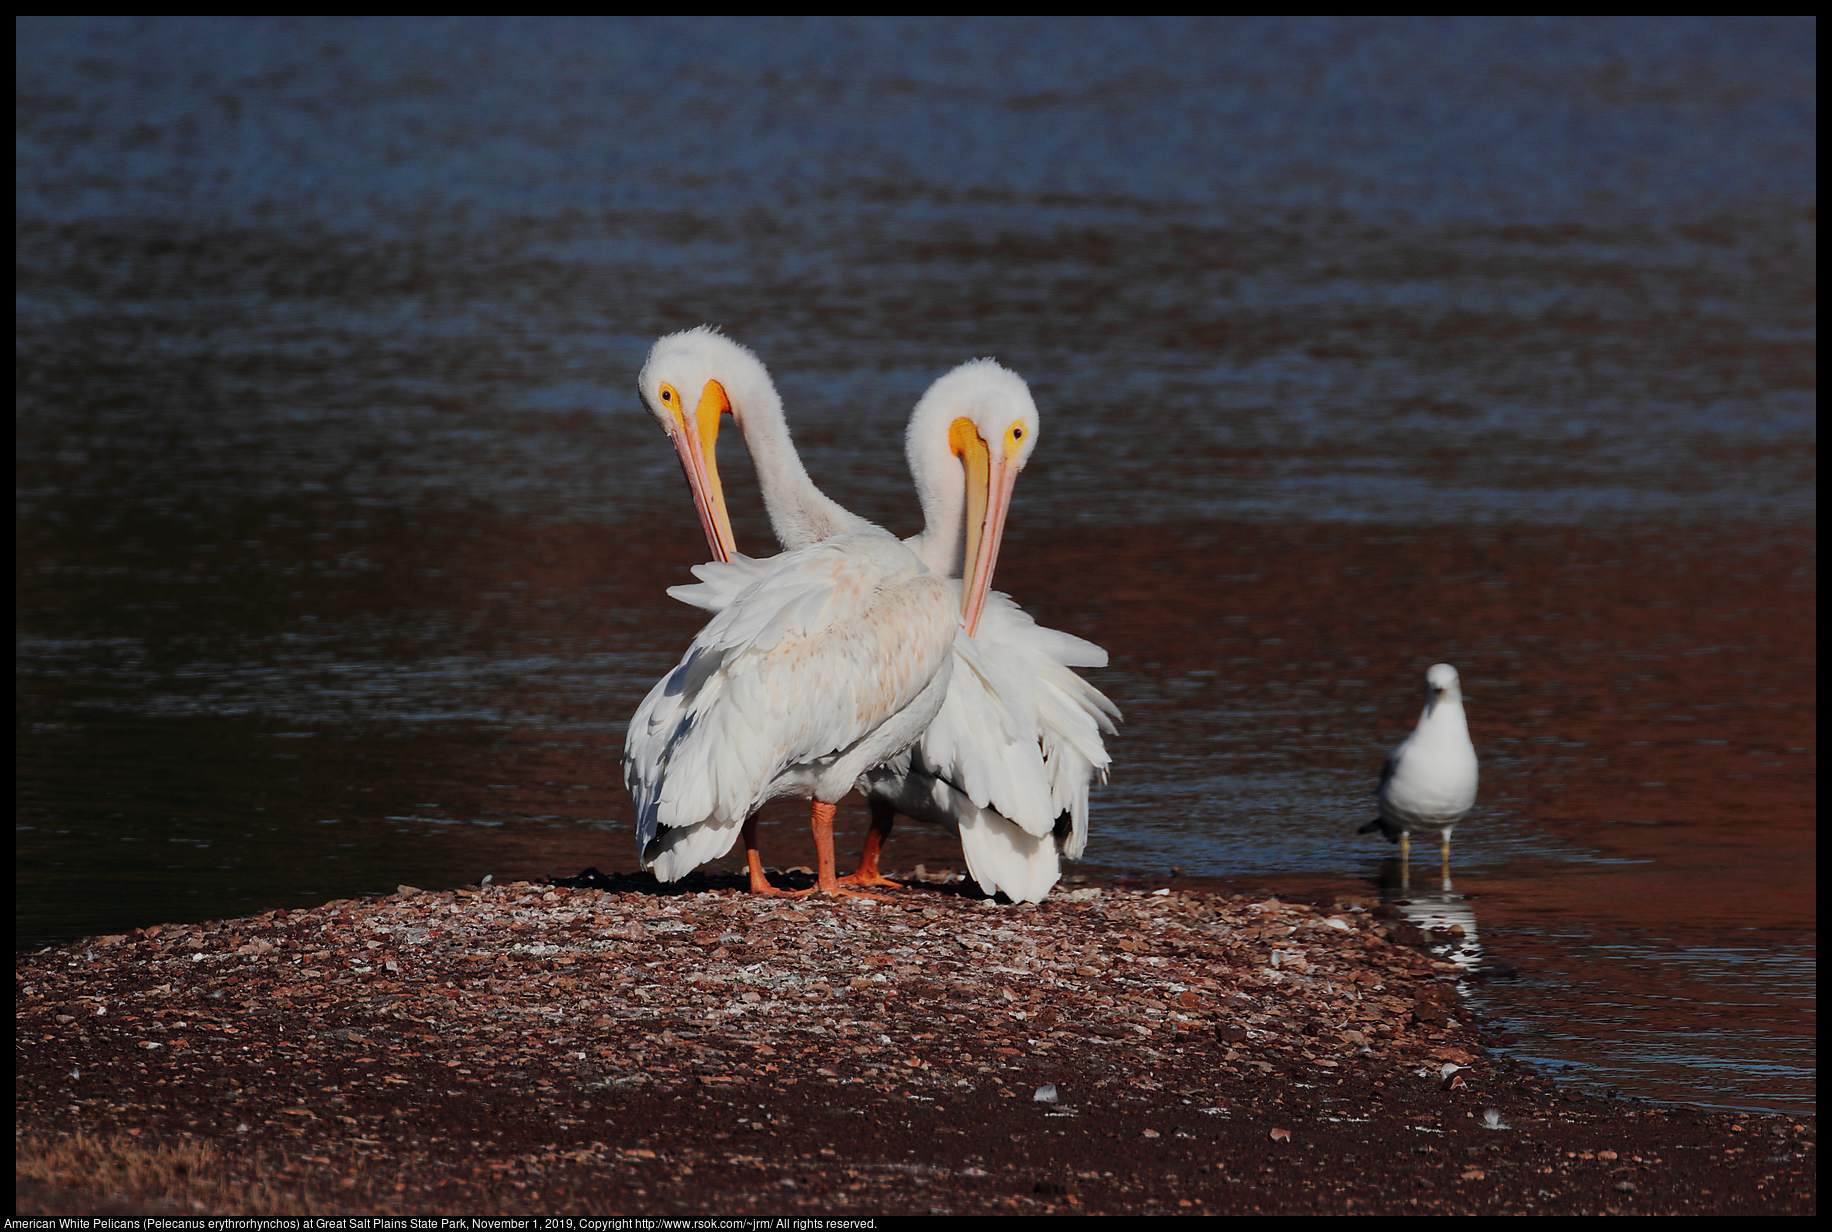 American White Pelicans (Pelecanus erythrorhynchos) at Great Salt Plains State Park, November 1, 2019